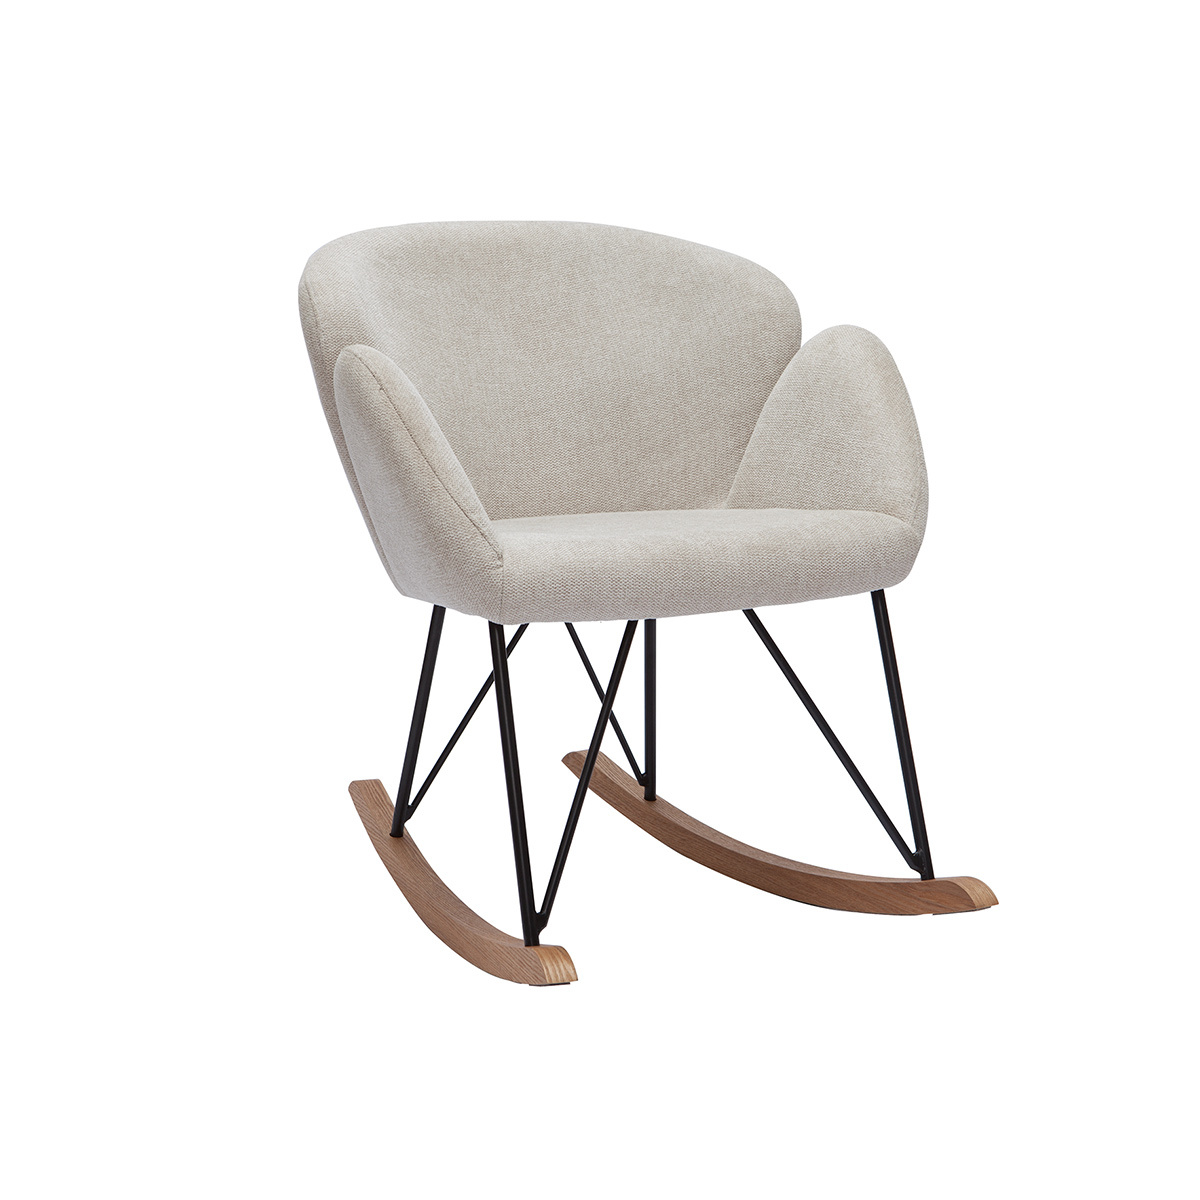 Rocking chair design effet velours texturé beige RHAPSODY vue1